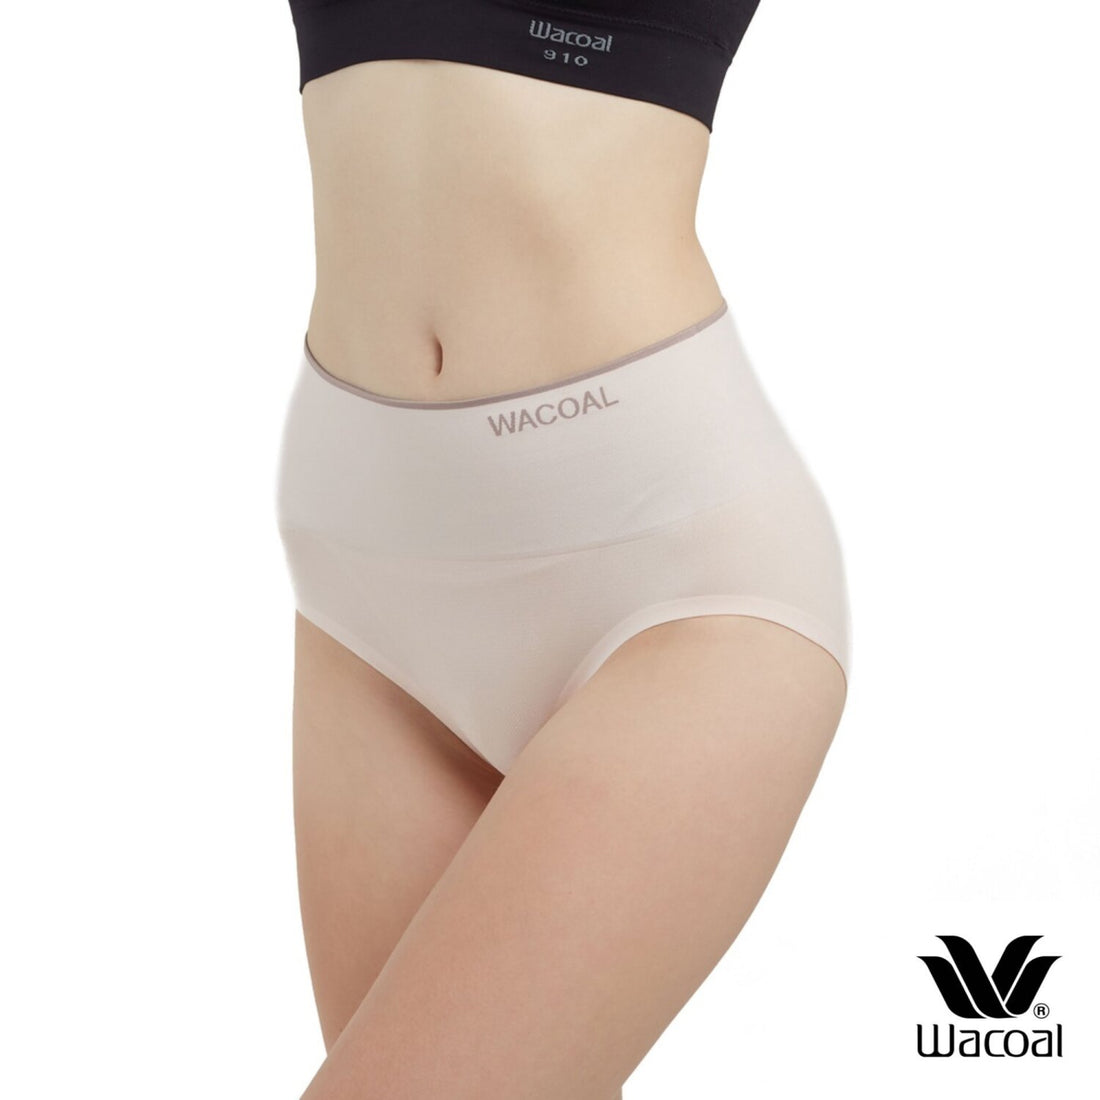 Wacoal H-fit secret support seamless underwear, full shape, Set of 5 pieces, model WU4F98, assorted colors (black 2-beige 2-ovaltine 1)